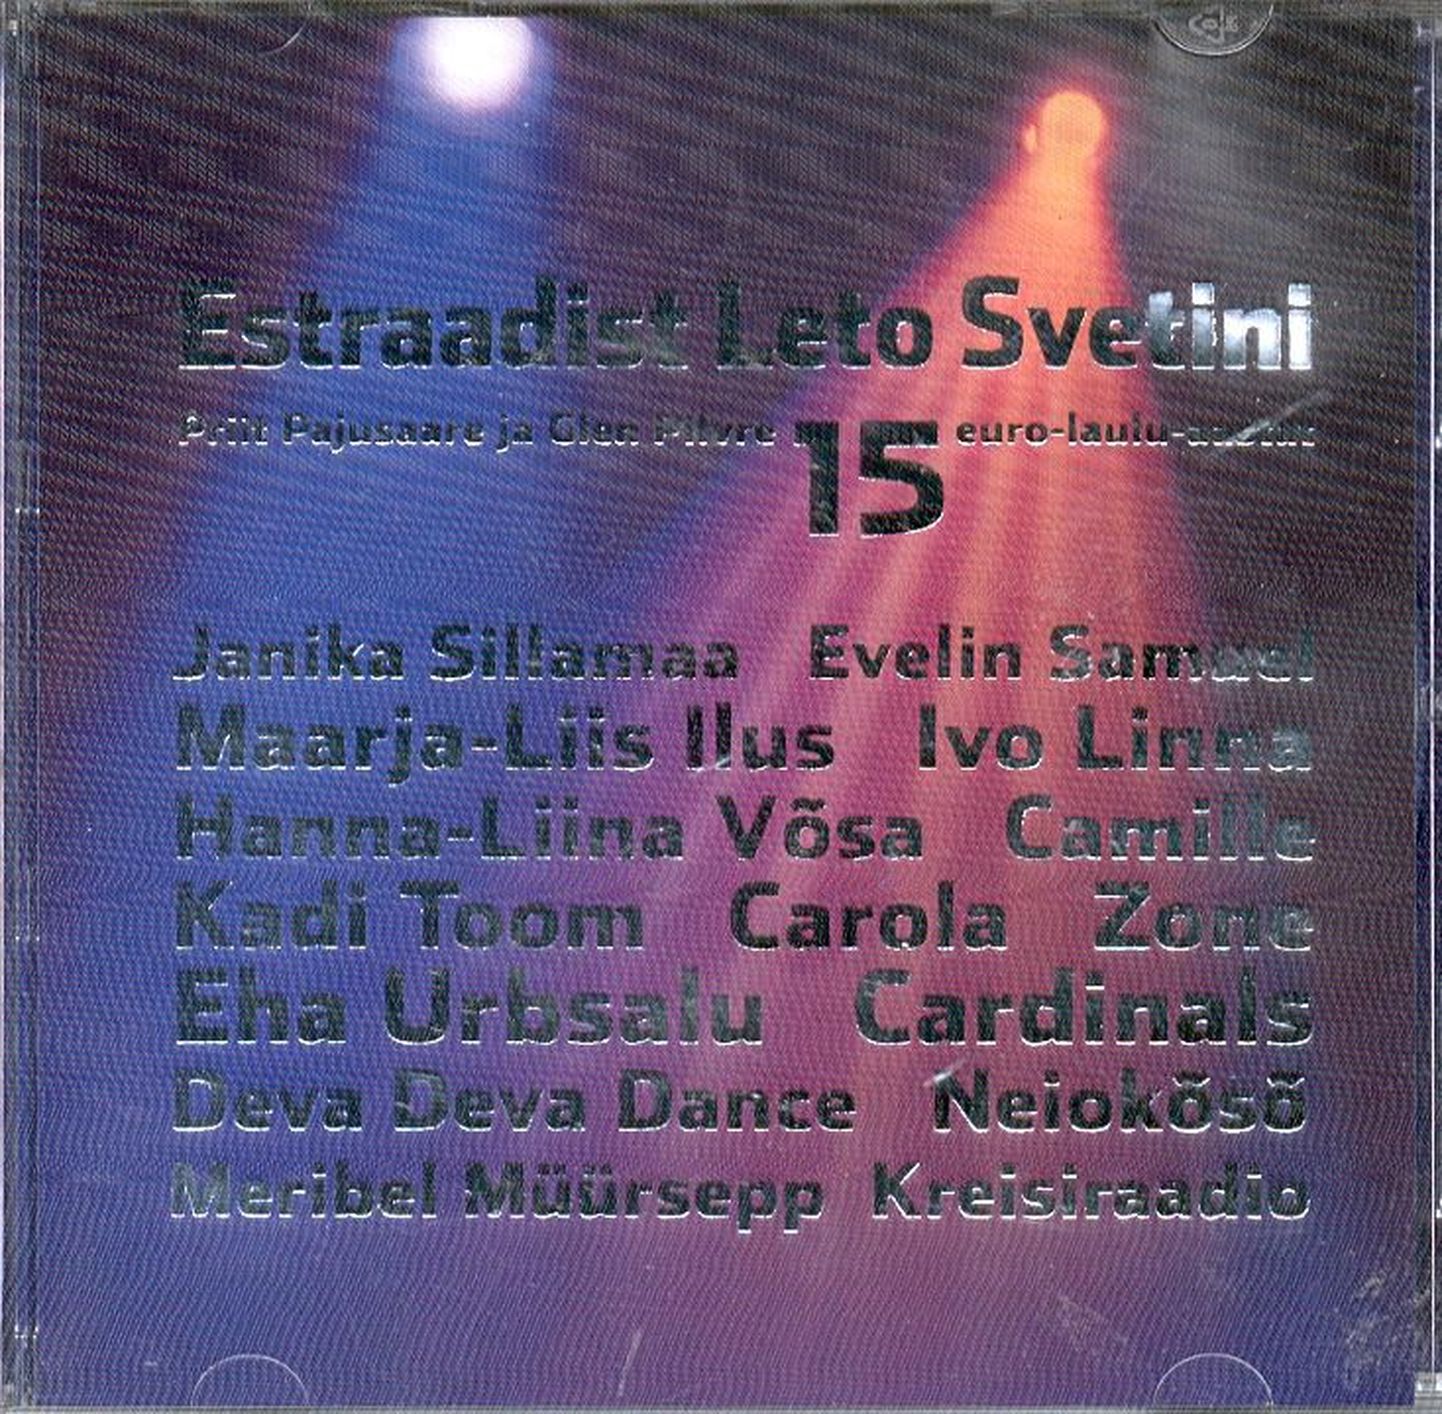 "Estraadist Leto Svetini".